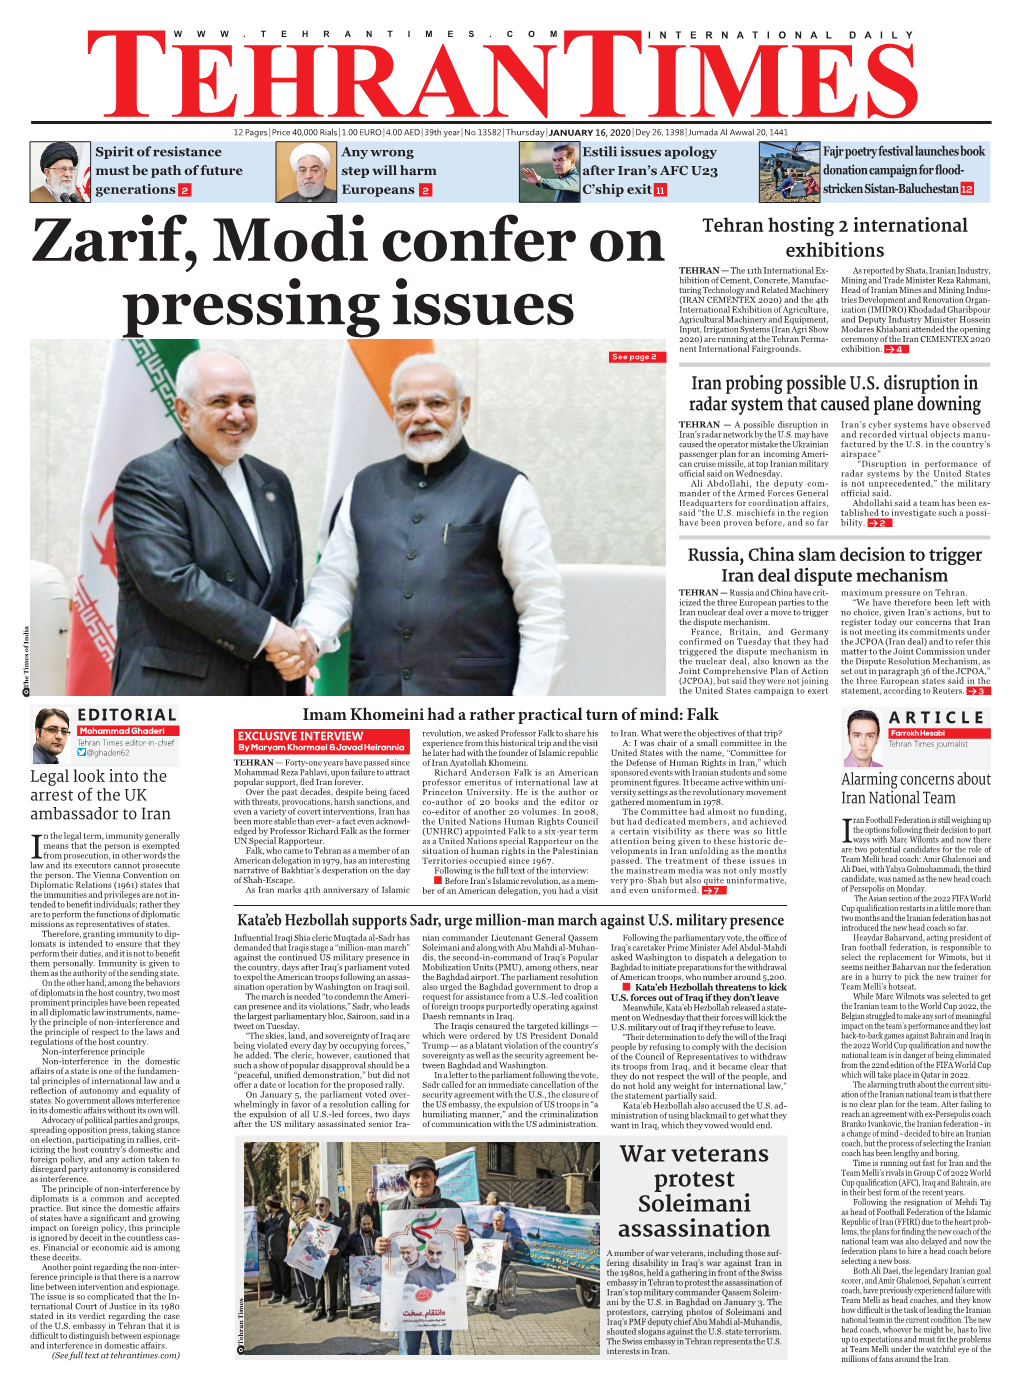 Zarif, Modi Confer on Pressing Issues